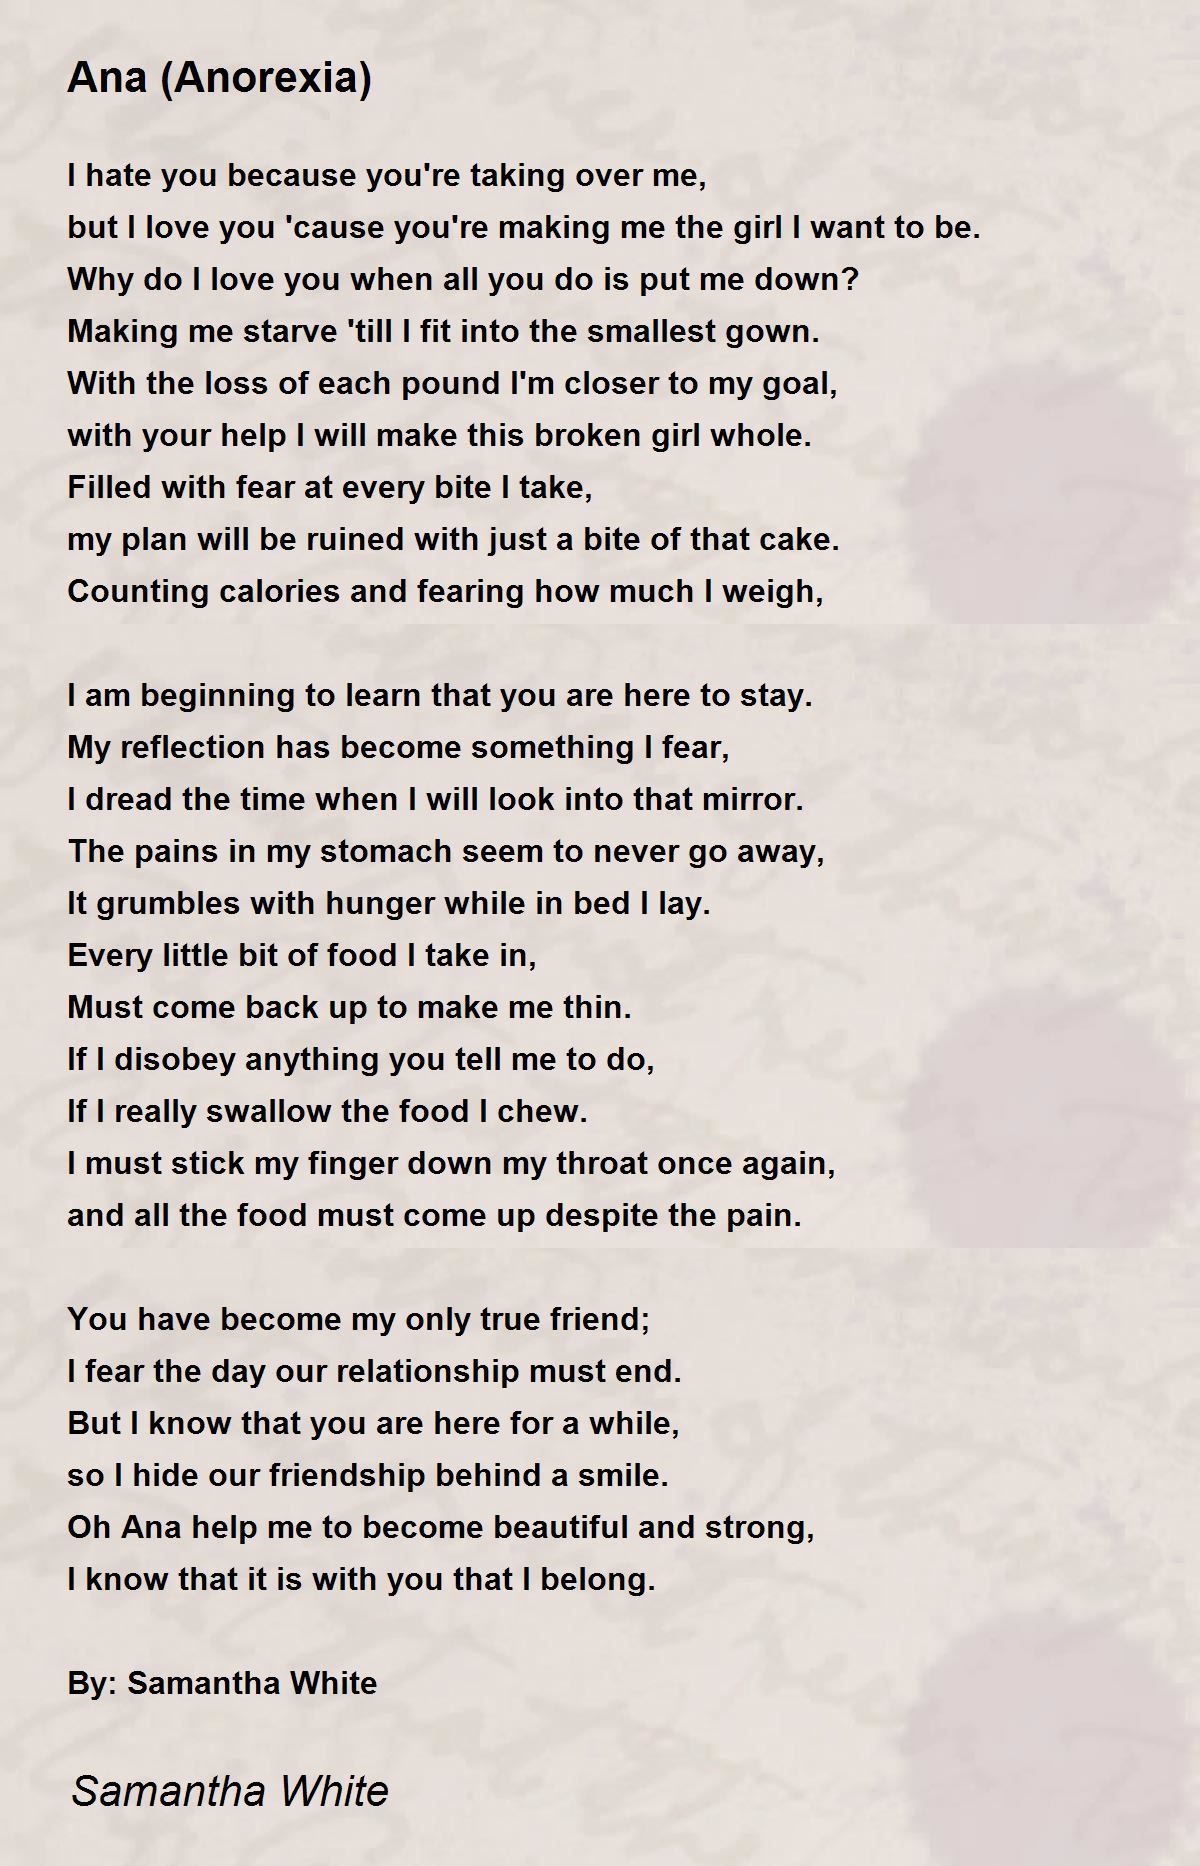 Ana (Anorexia) - Ana (Anorexia) Poem by Samantha White